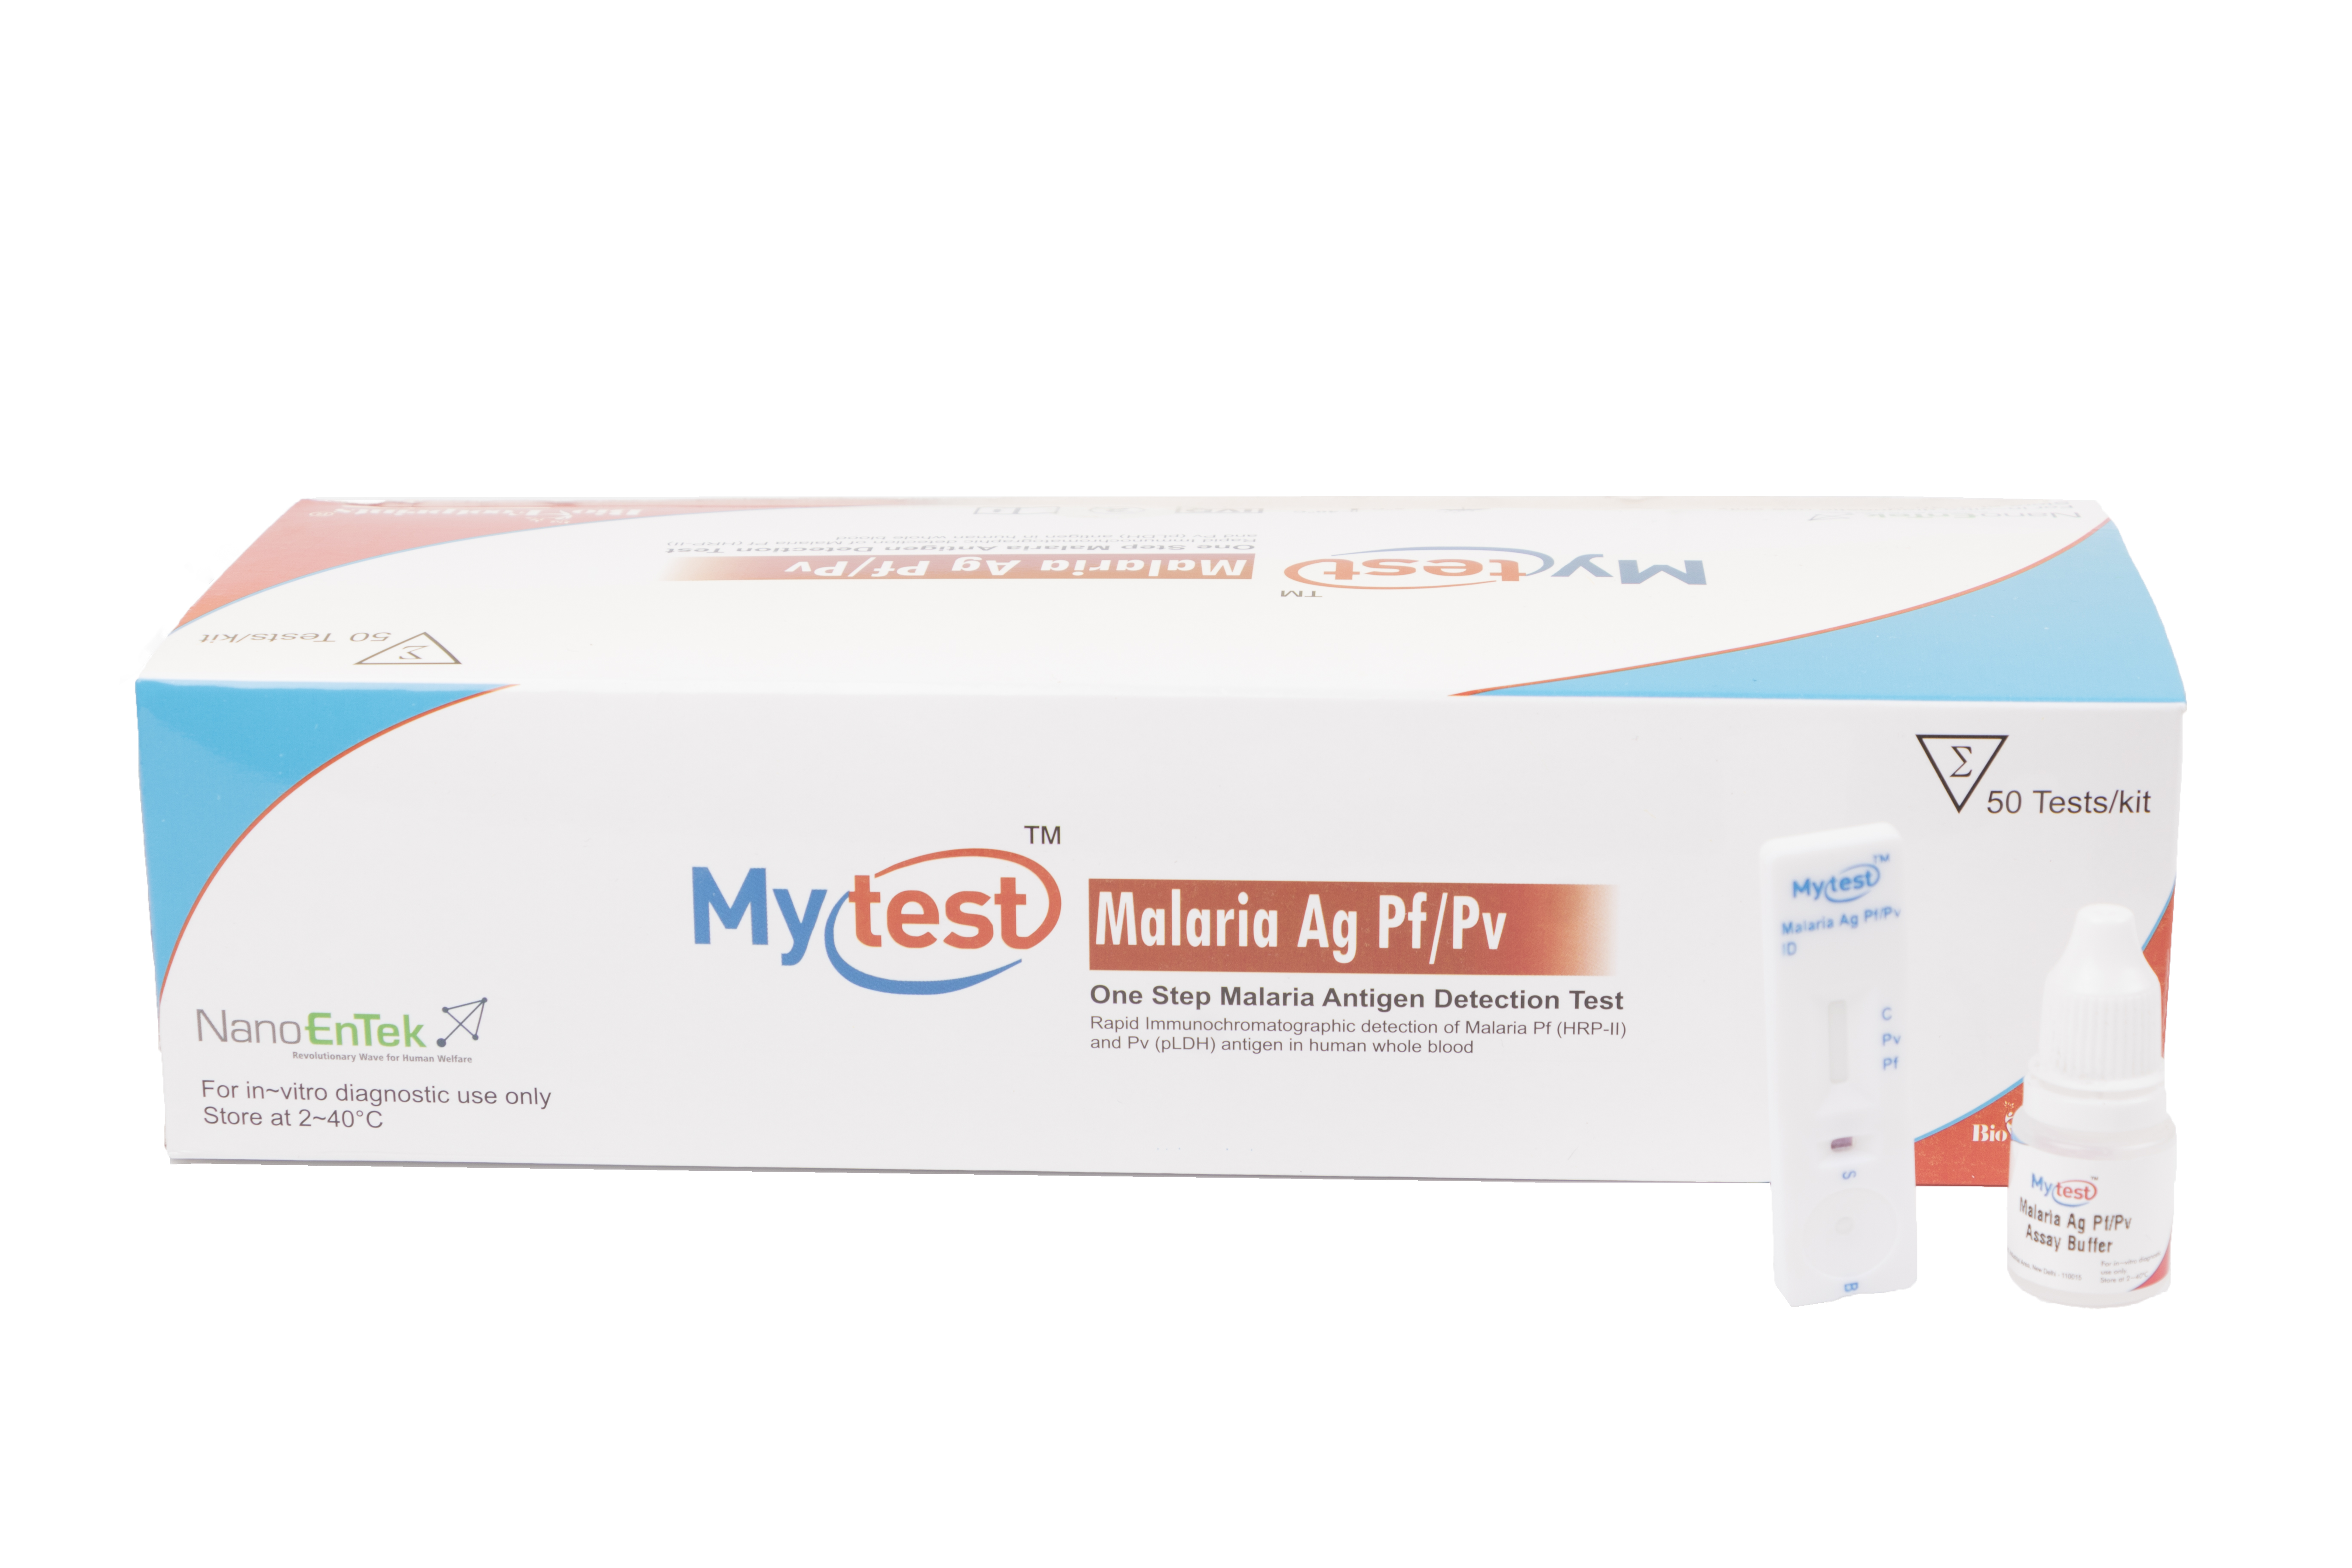 Mytest Malaria Ag Pf/Pv